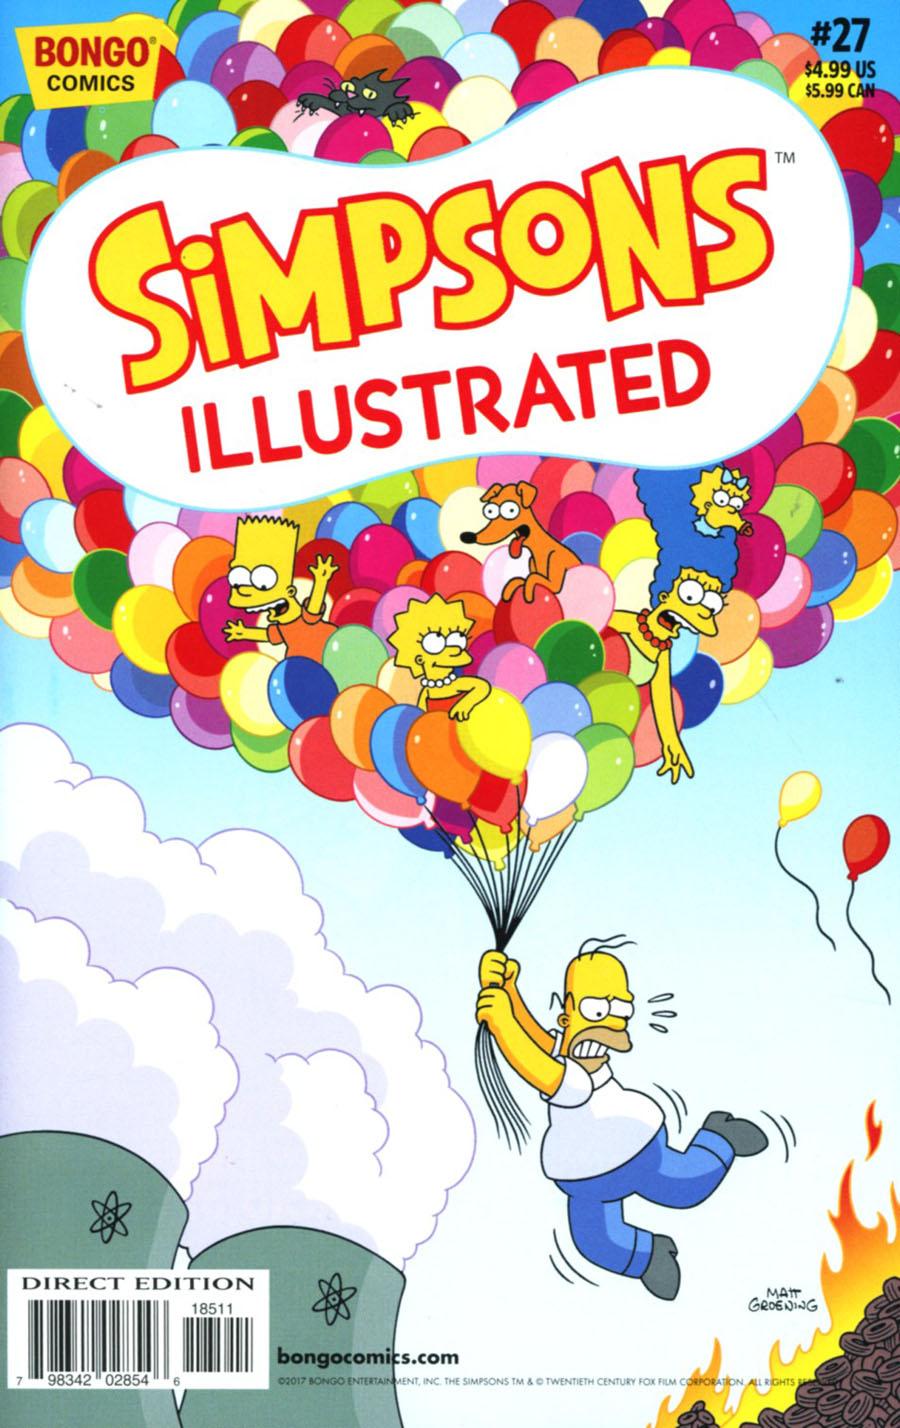 Simpsons Illustrated Vol. 1 #27